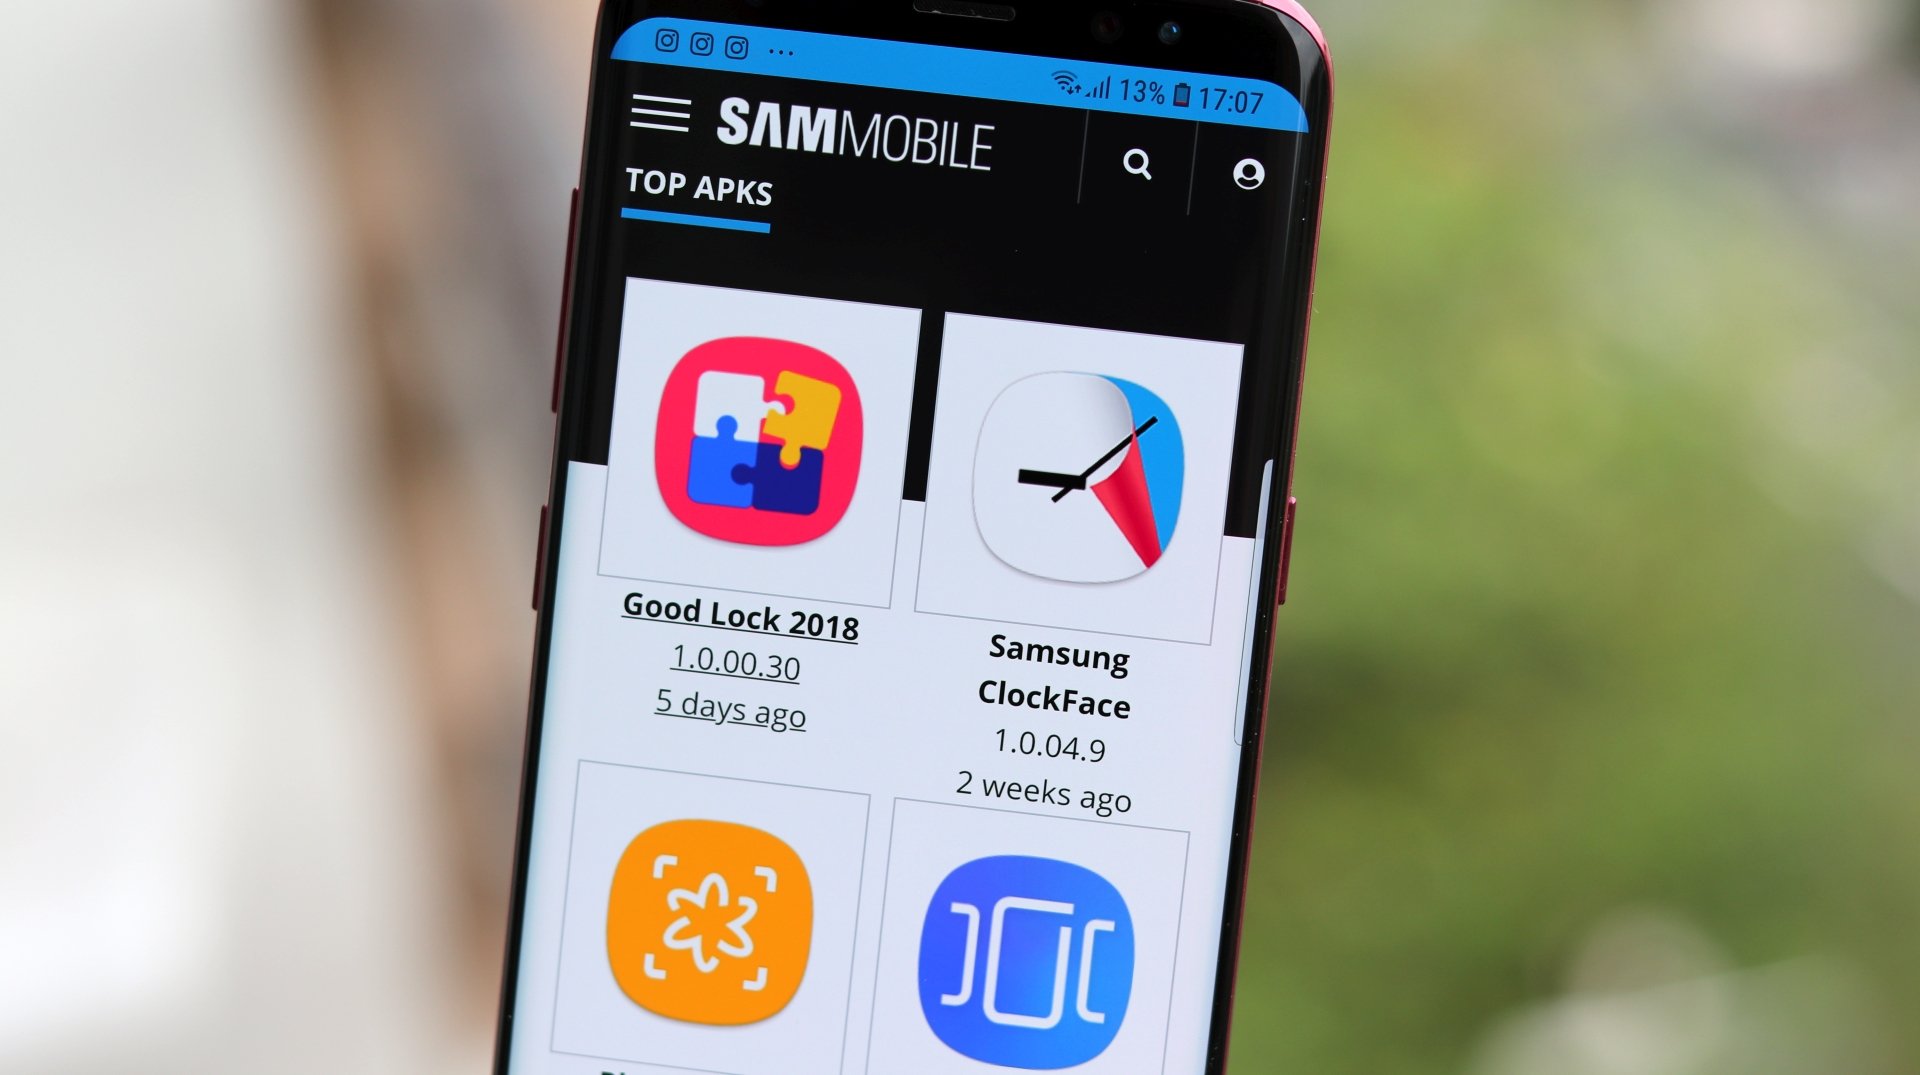 Top Samsung Galaxy APKs on SamMobile this week - SamMobile